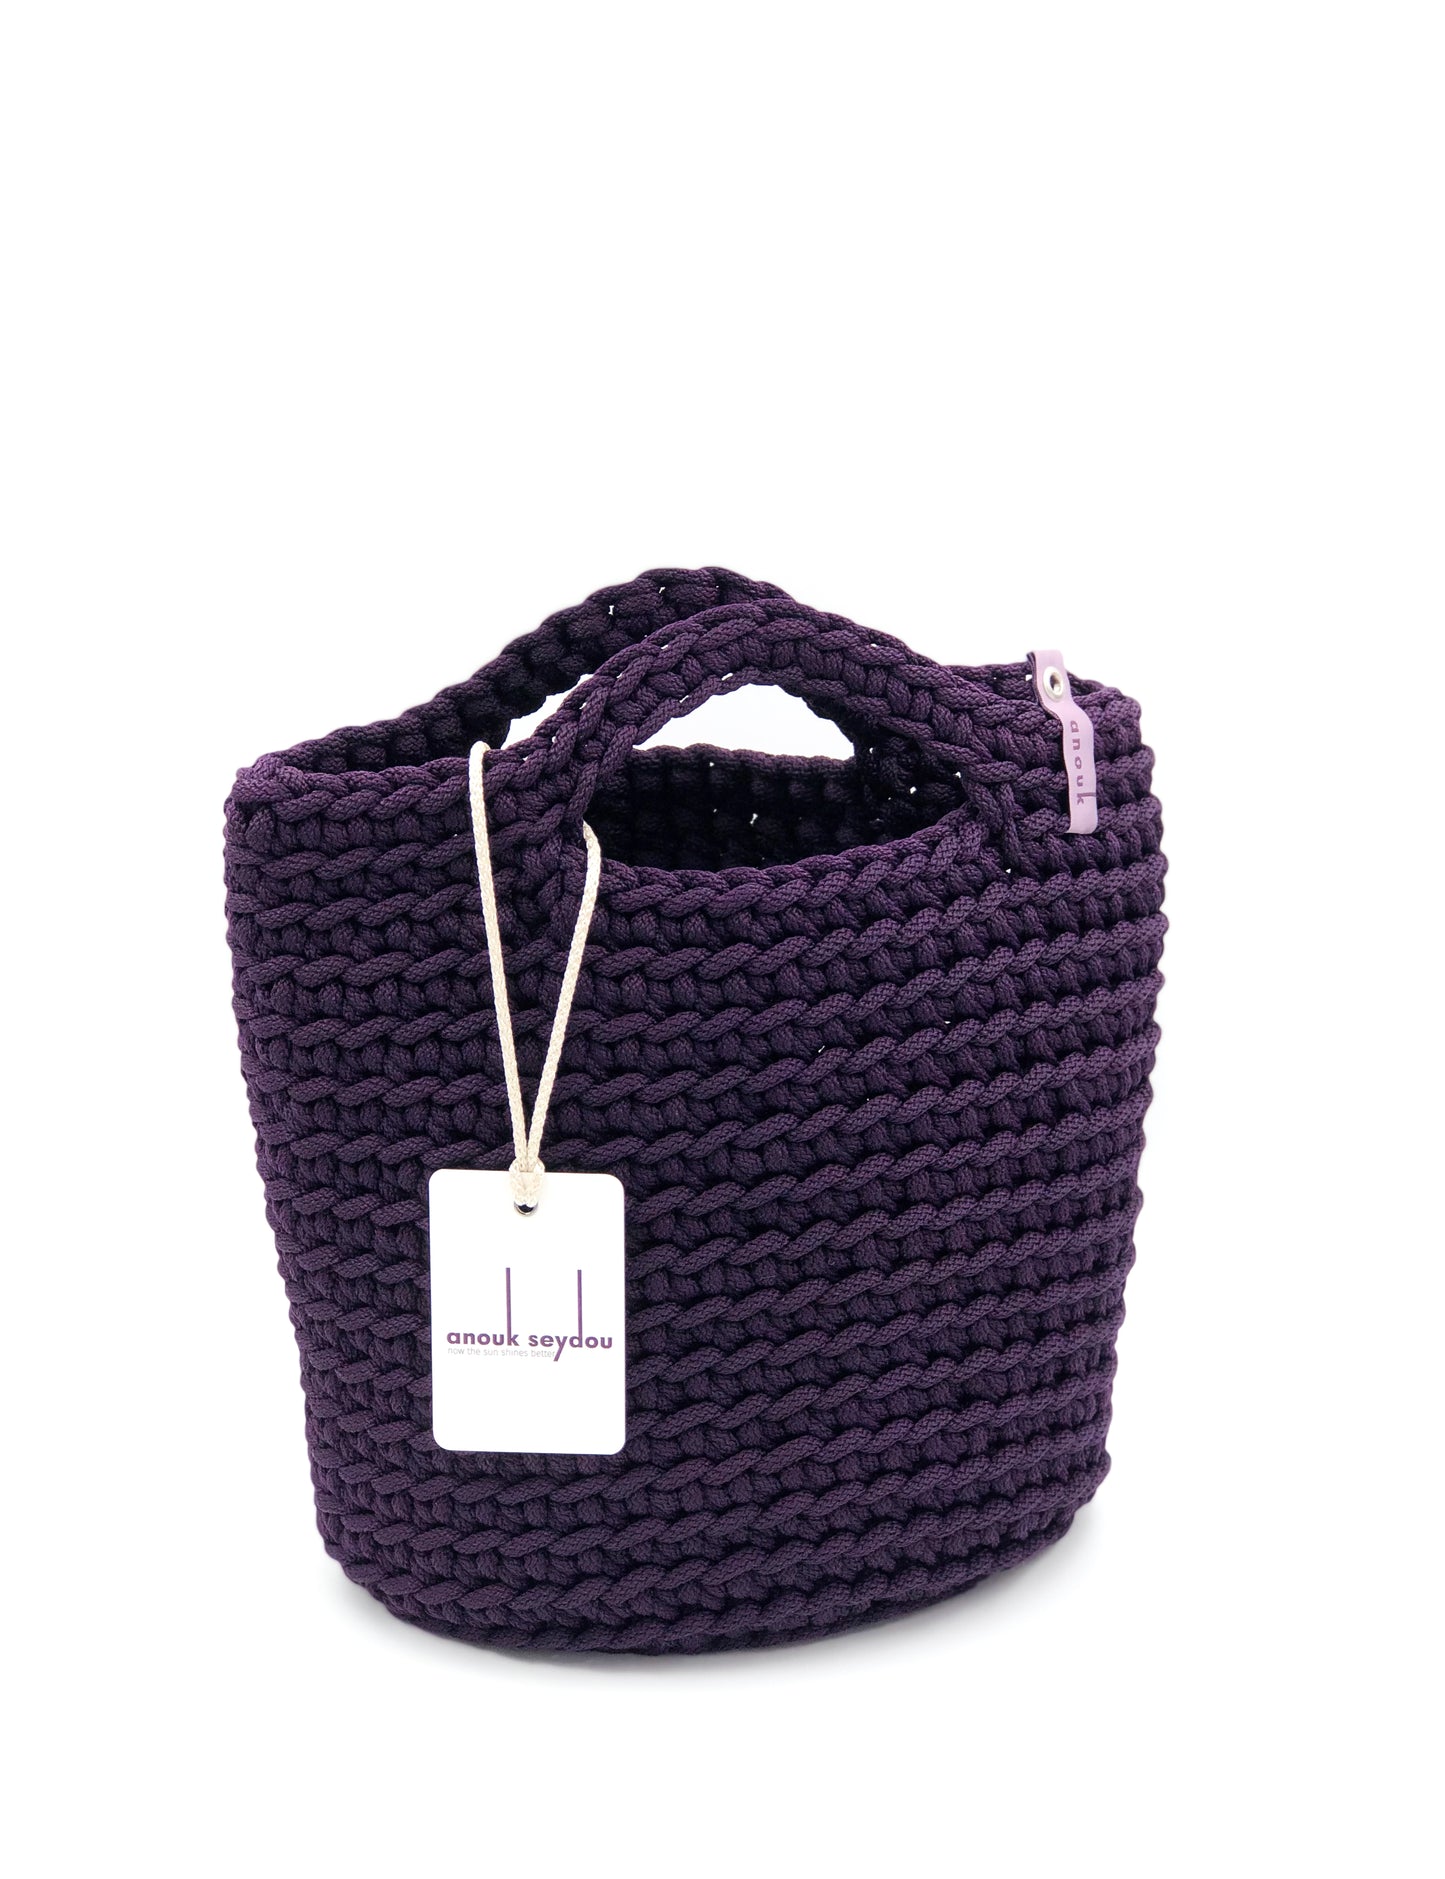 Scandinavian Style Handmade Crochet Tote Bag with Short Handles